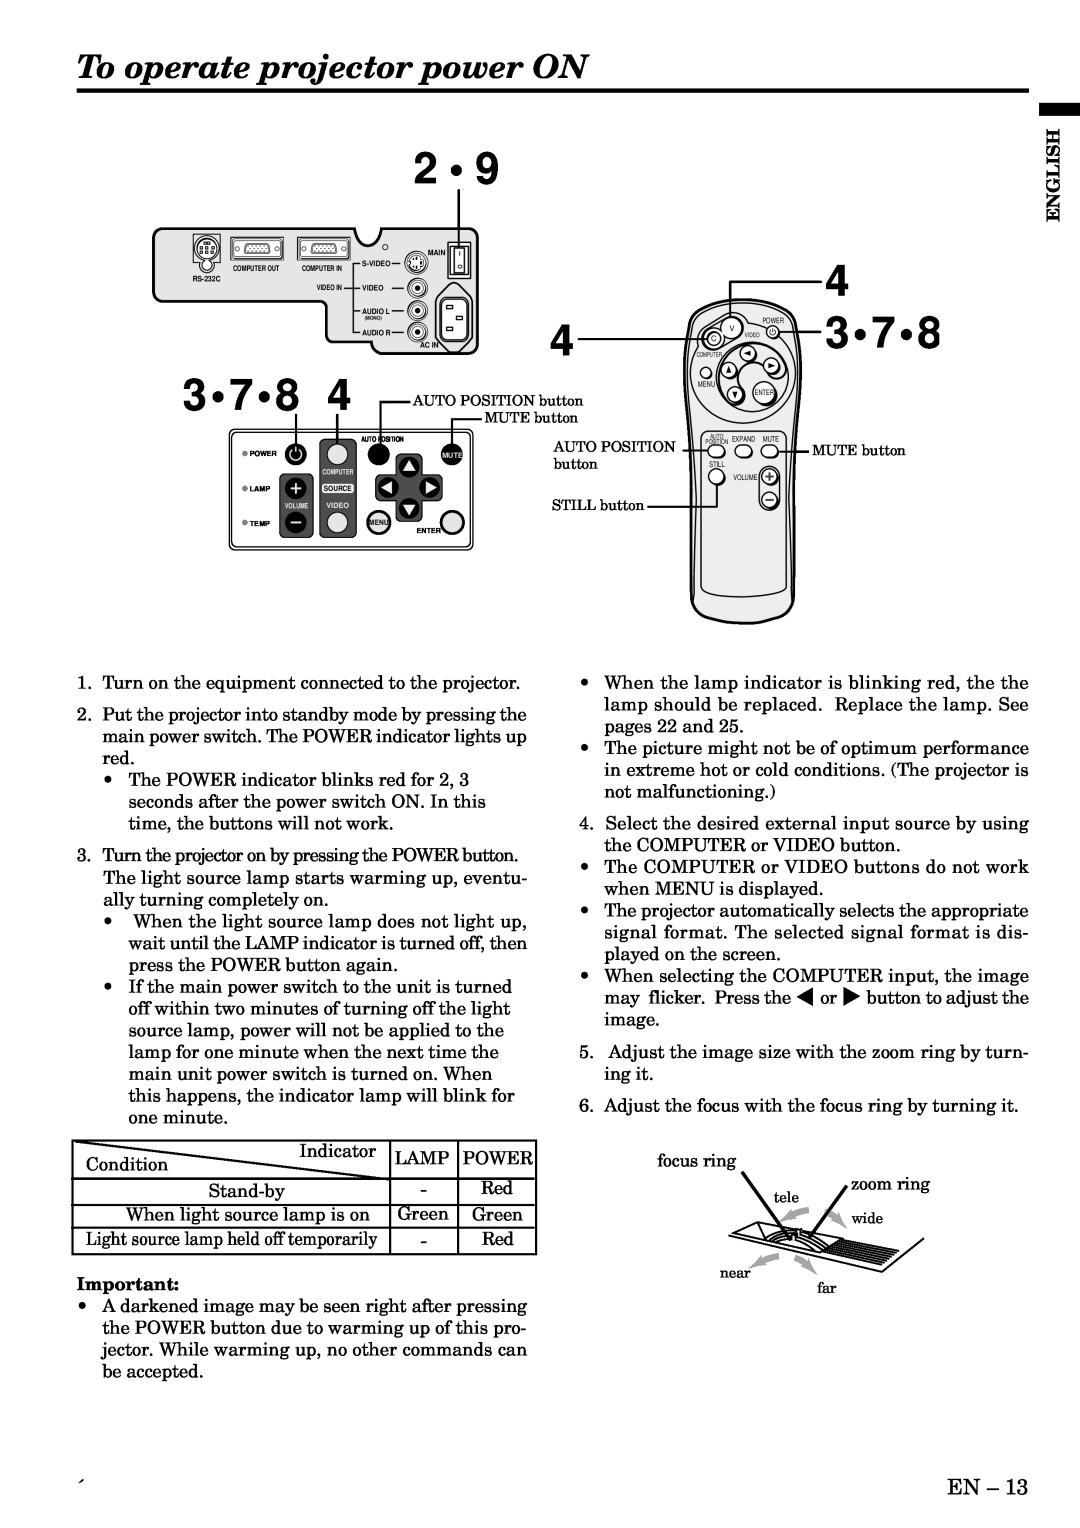 Mitsubishi Electronics LVP-SA51U user manual To operate projector power ON, tele wide near far 